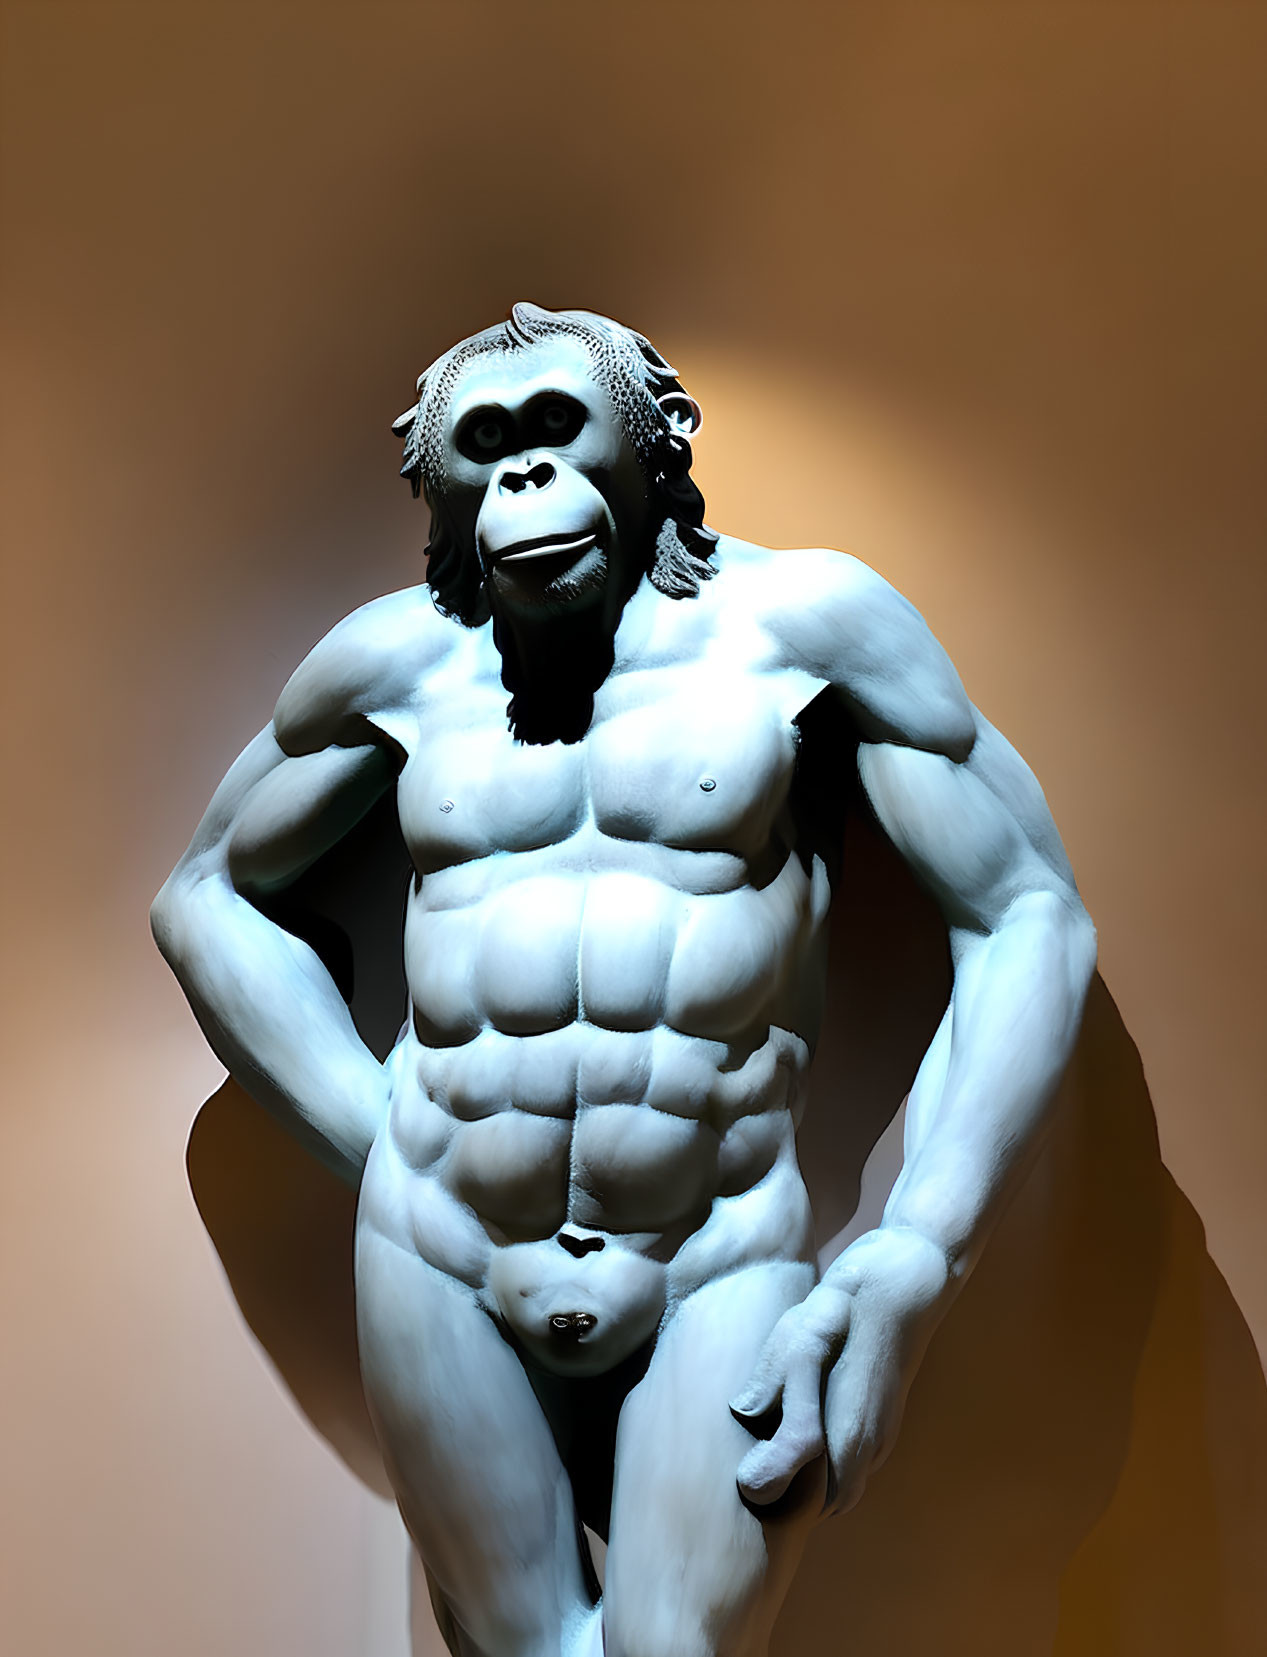 Muscular man with gorilla head statue against warm background